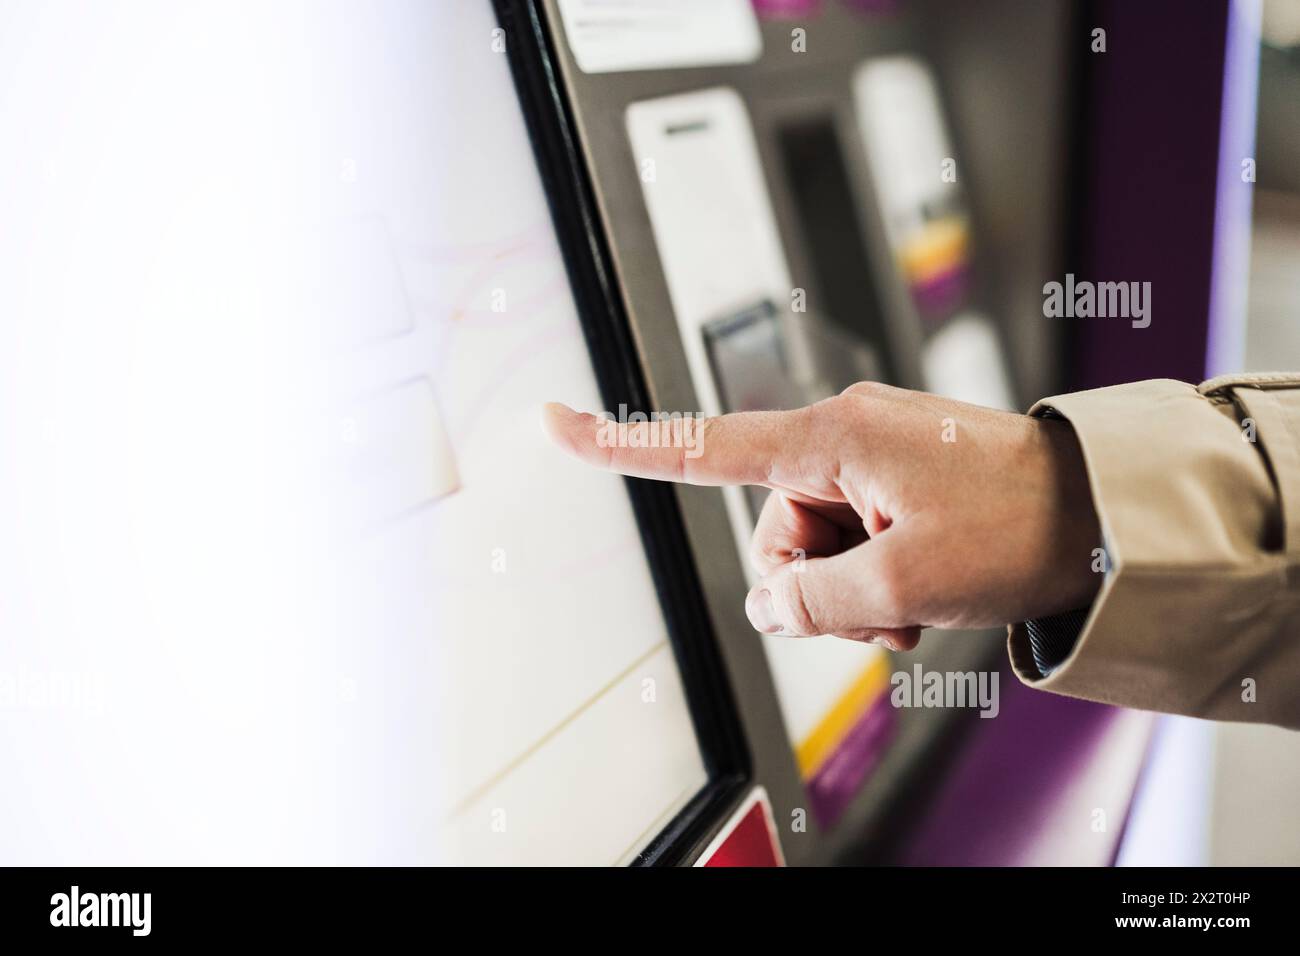 Frau, die den Bildschirm des Fahrkartenautomaten am Bahnhof berührt Stockfoto